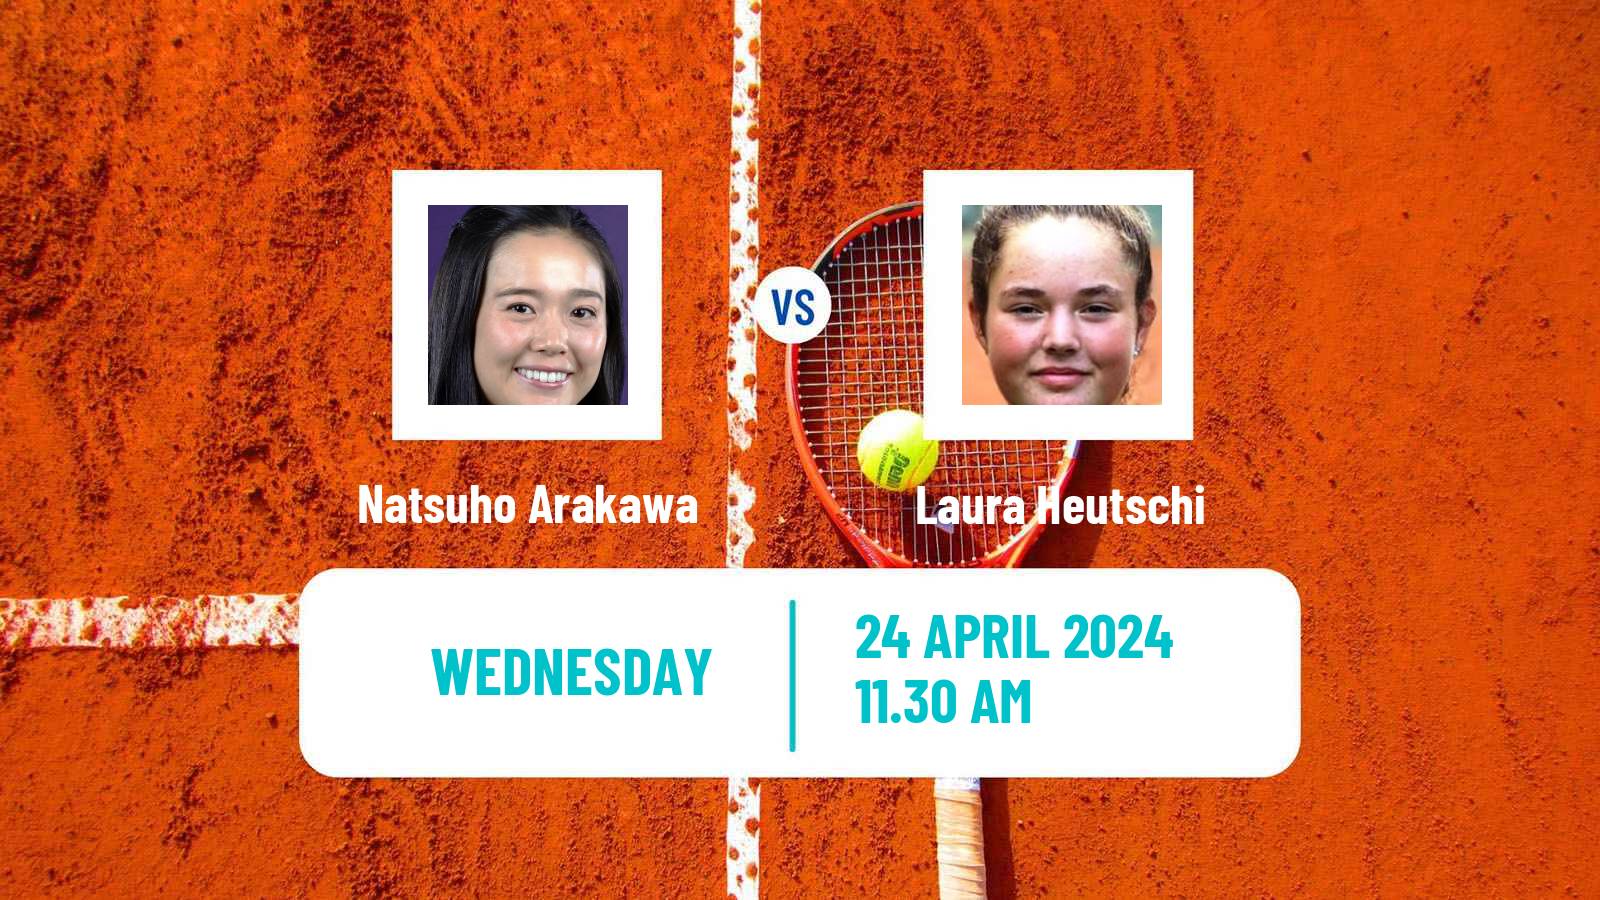 Tennis ITF W15 Monastir 15 Women Natsuho Arakawa - Laura Heutschi